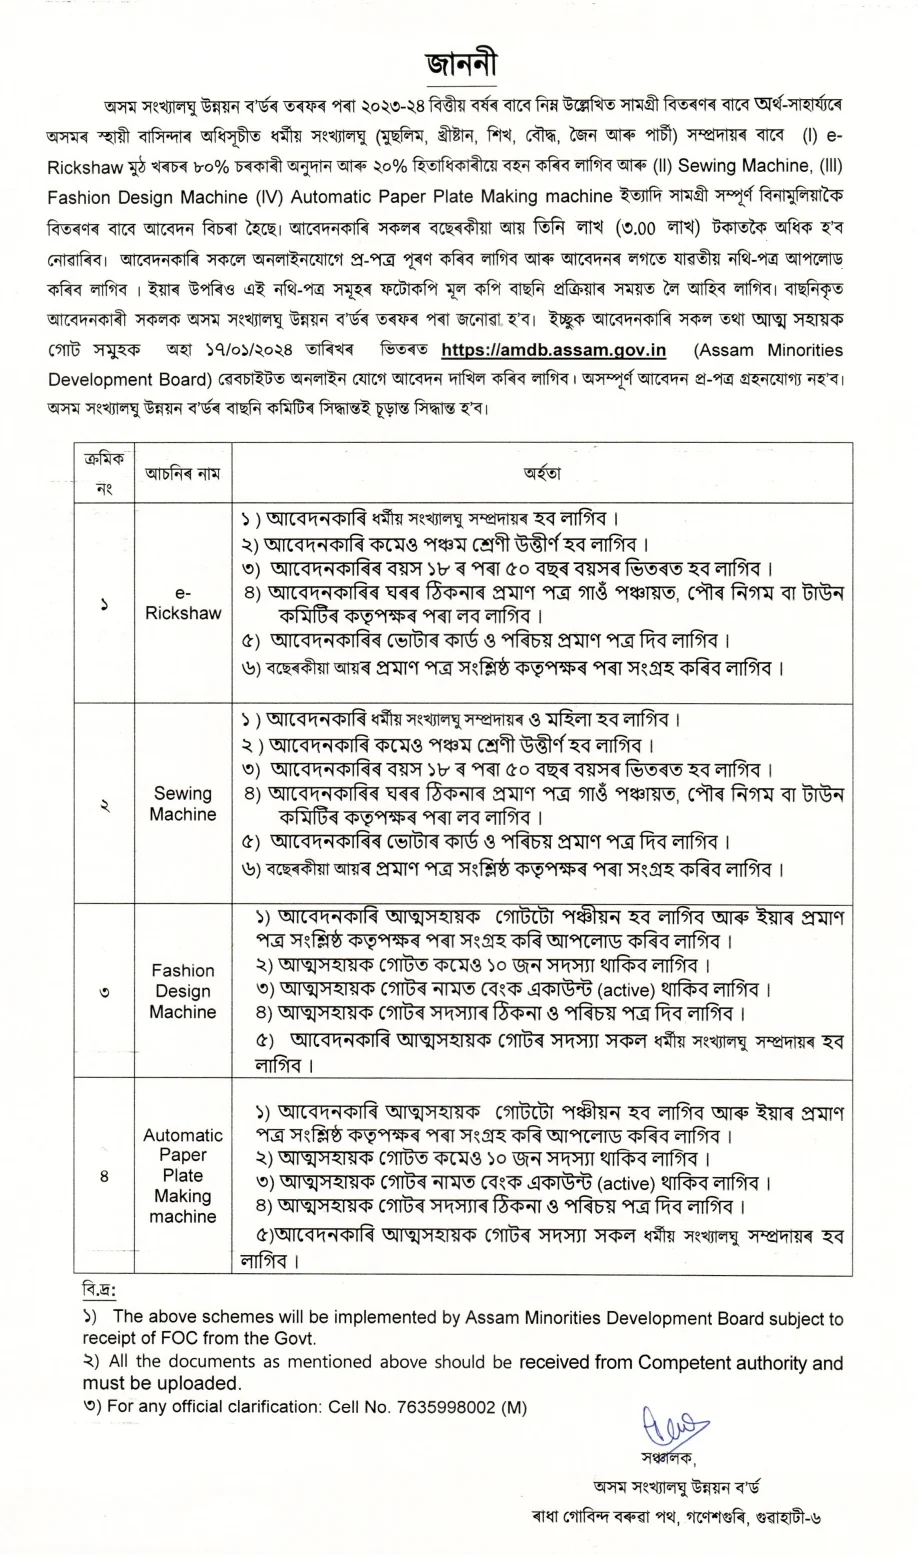 Assam Minorities Development Board